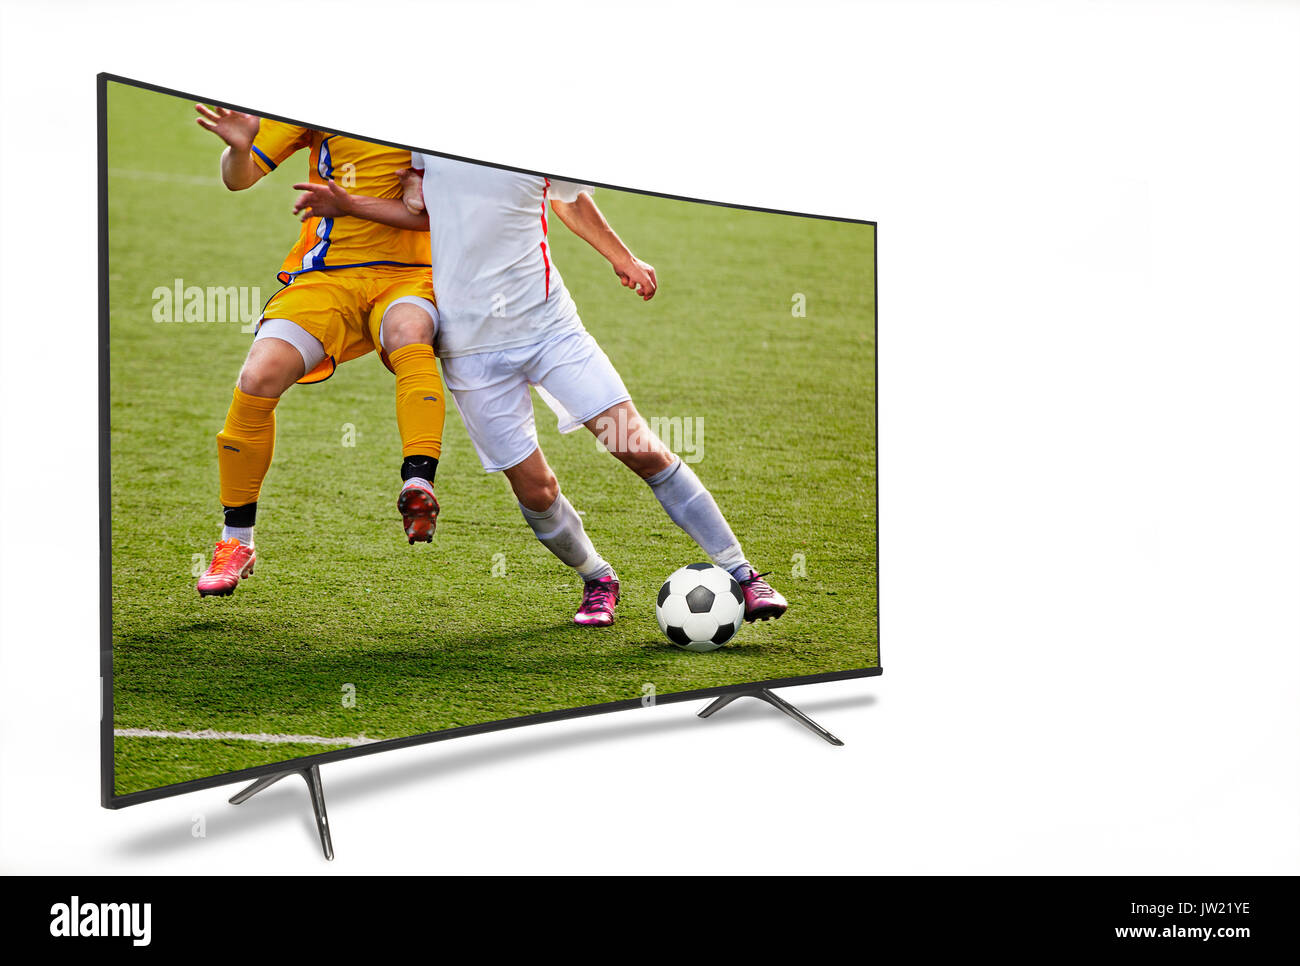 Regarder la télévision intelligente traduction de match de football Photo  Stock - Alamy